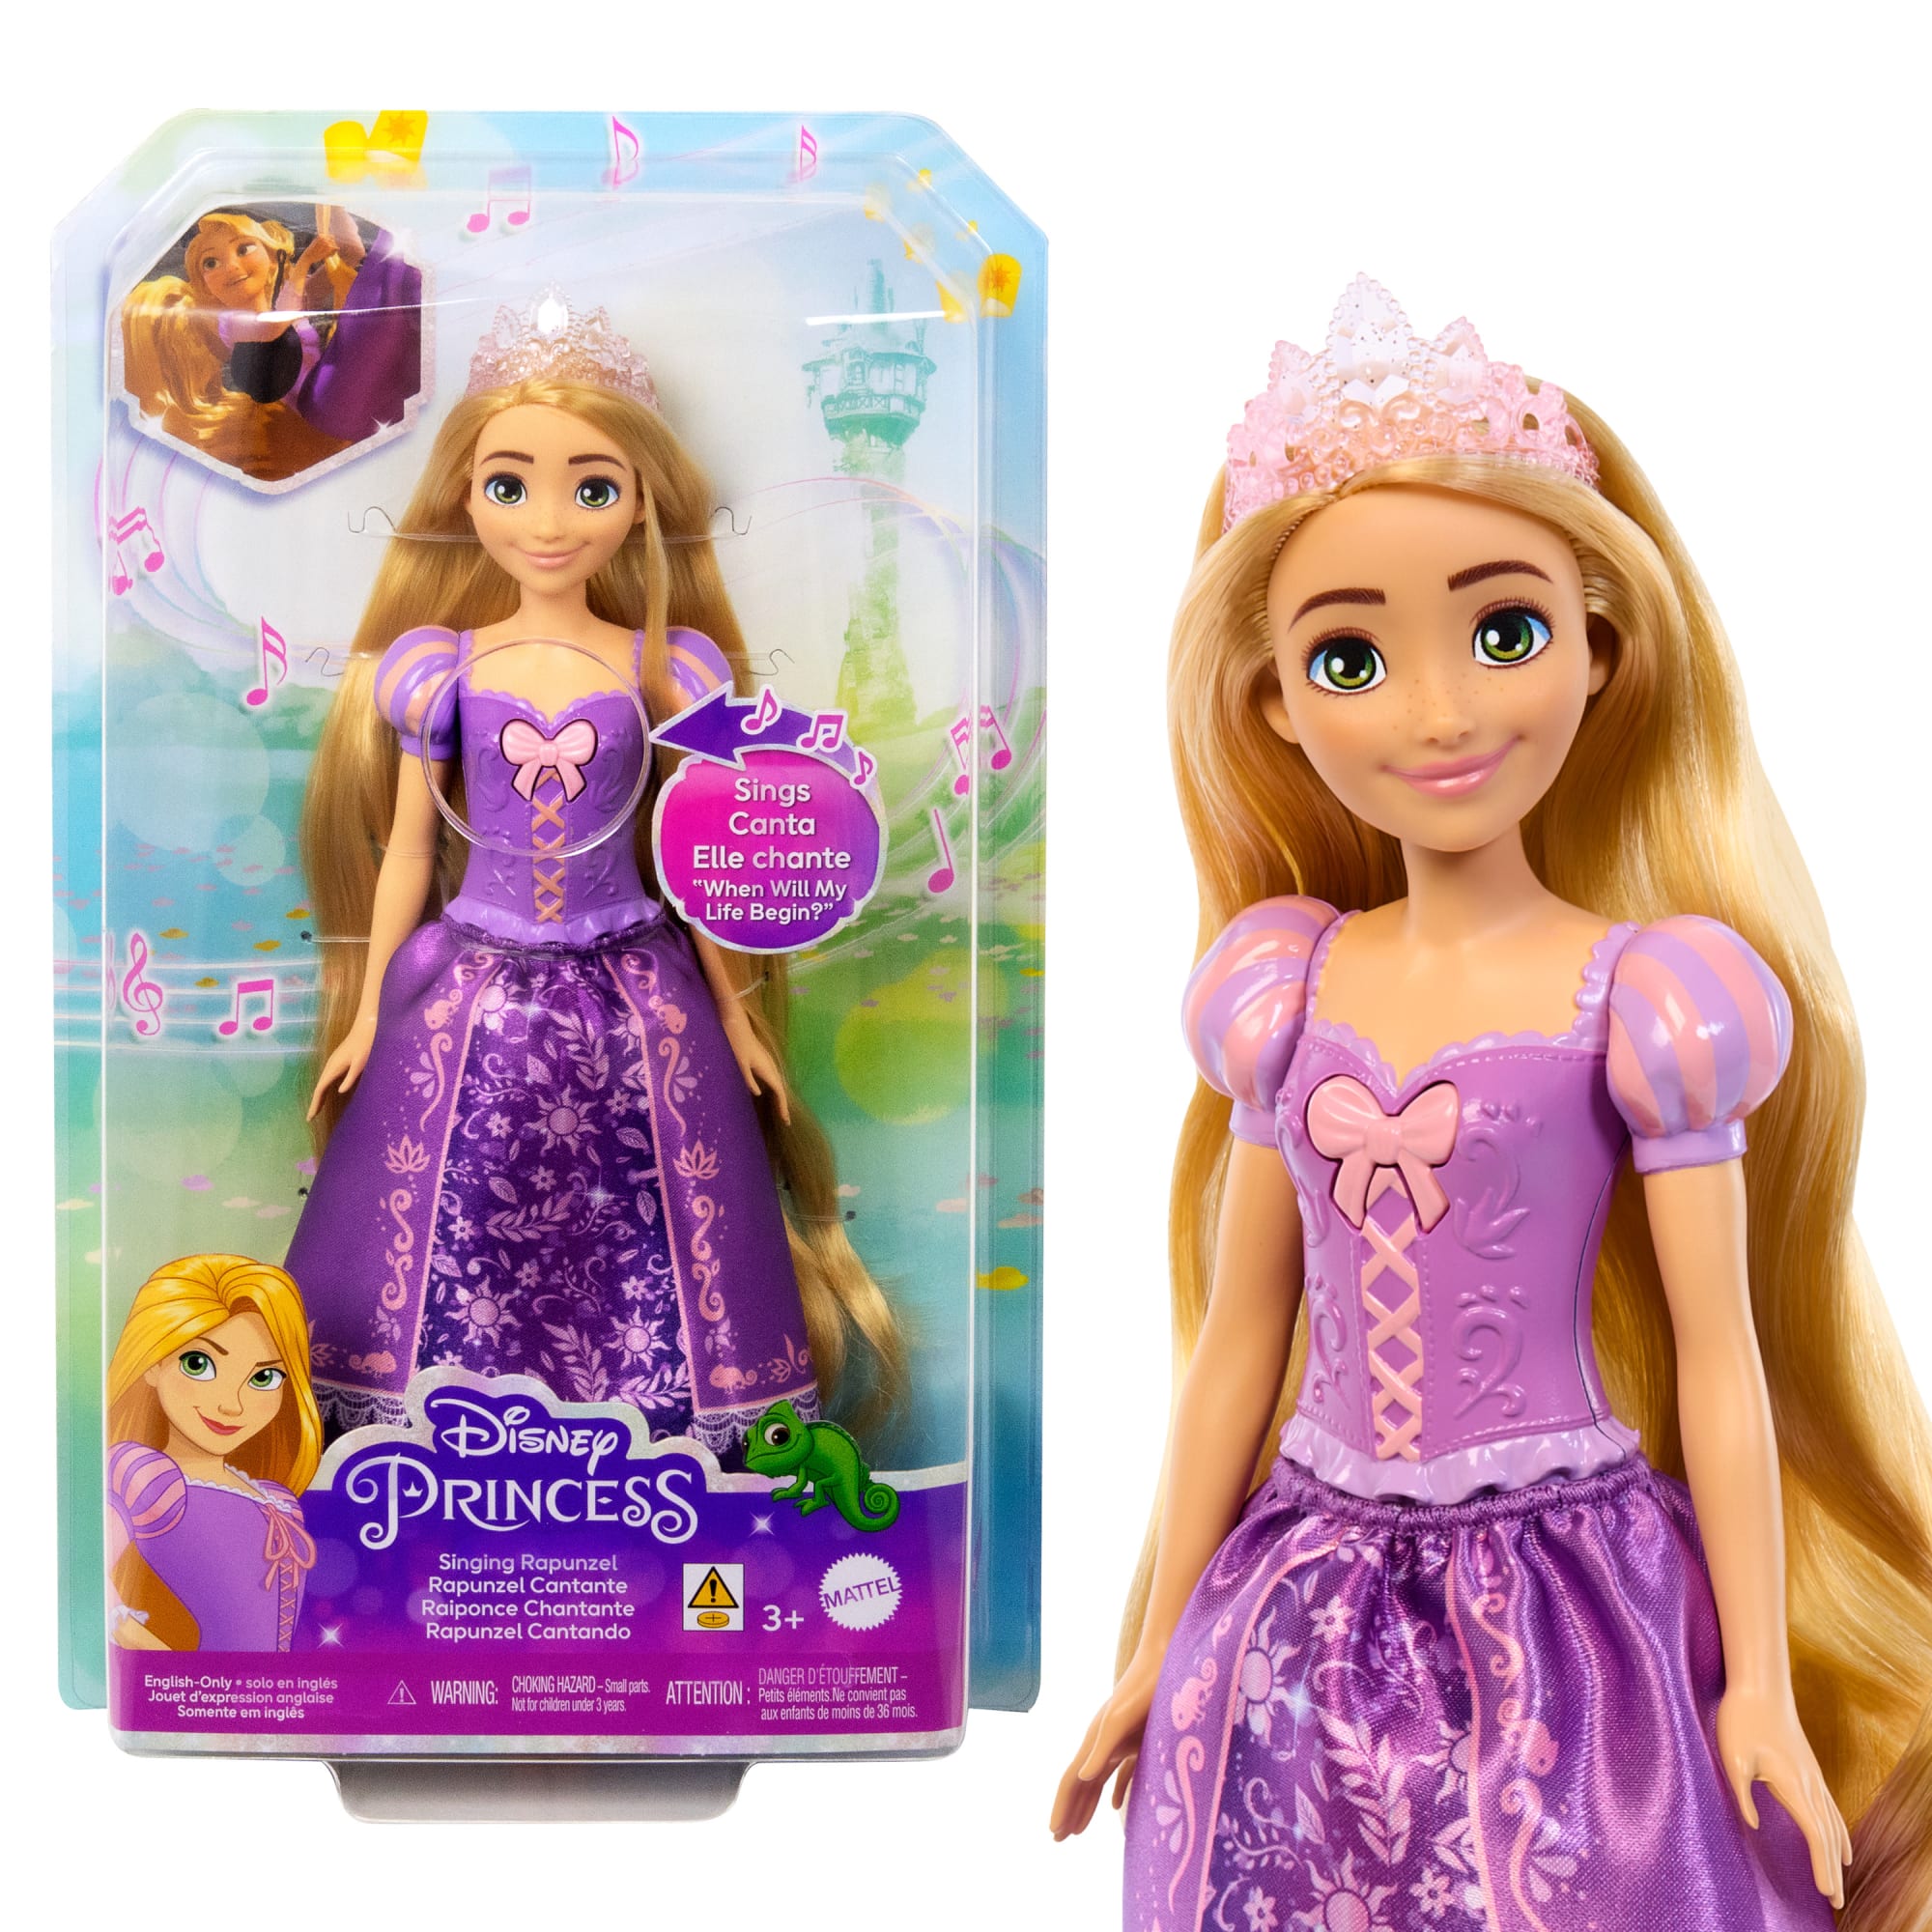 Fisher Price Little People Disney Princess Cinderella & Rapunzel Figures  2012